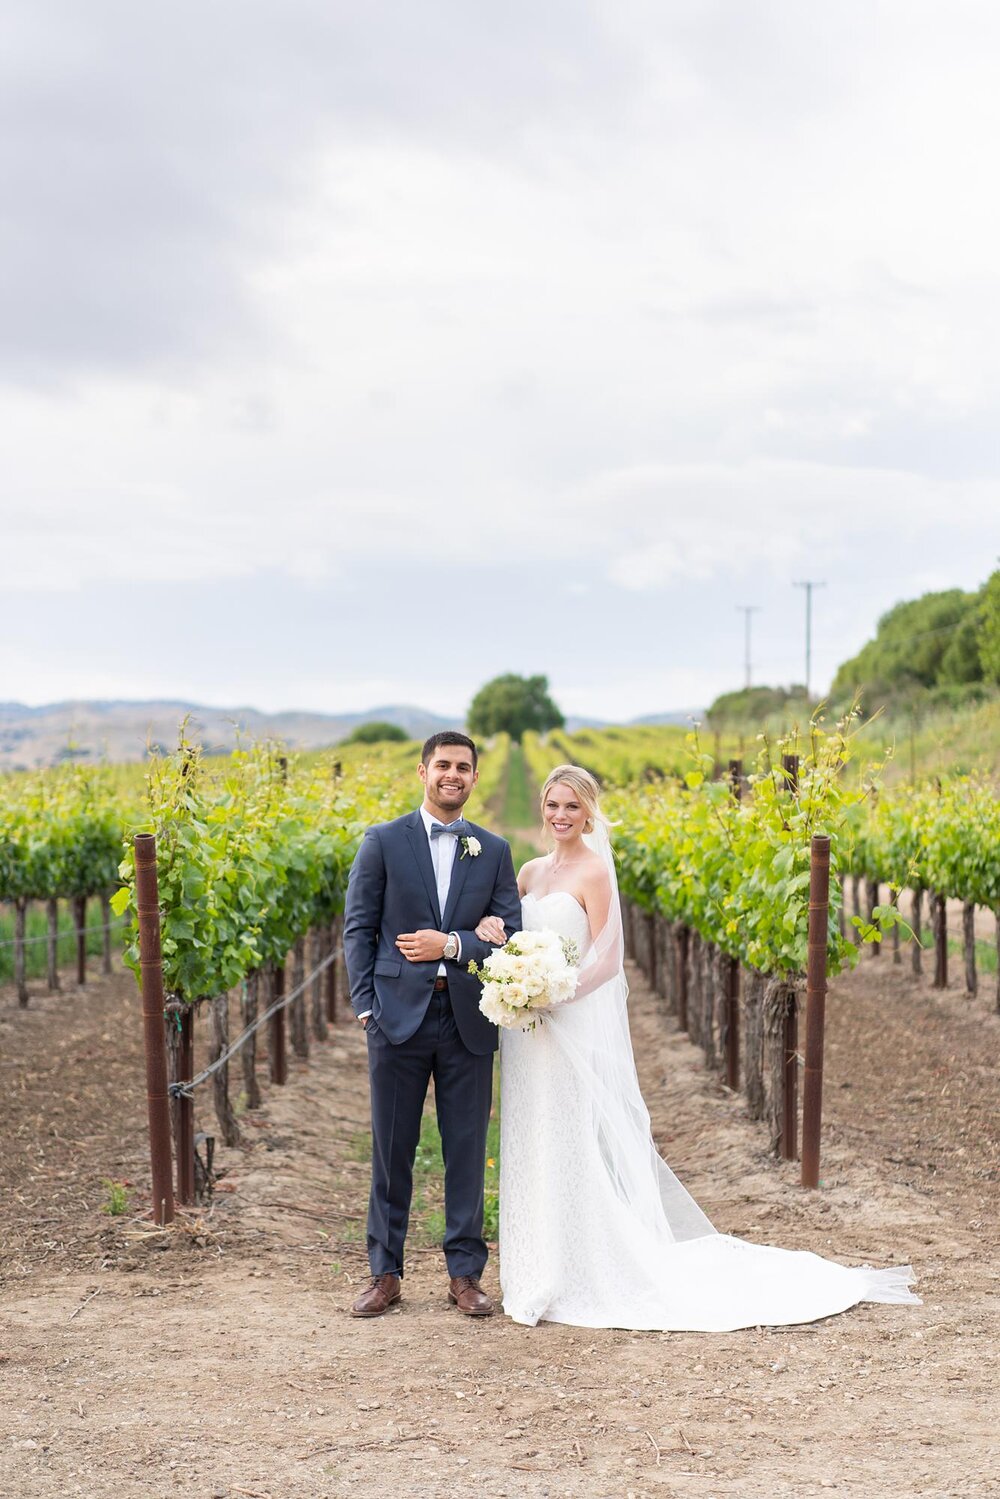 Rio Vista Vineyard Wedding Santa Ynez | Miki & Sonja Photography | mikiandsonja.com